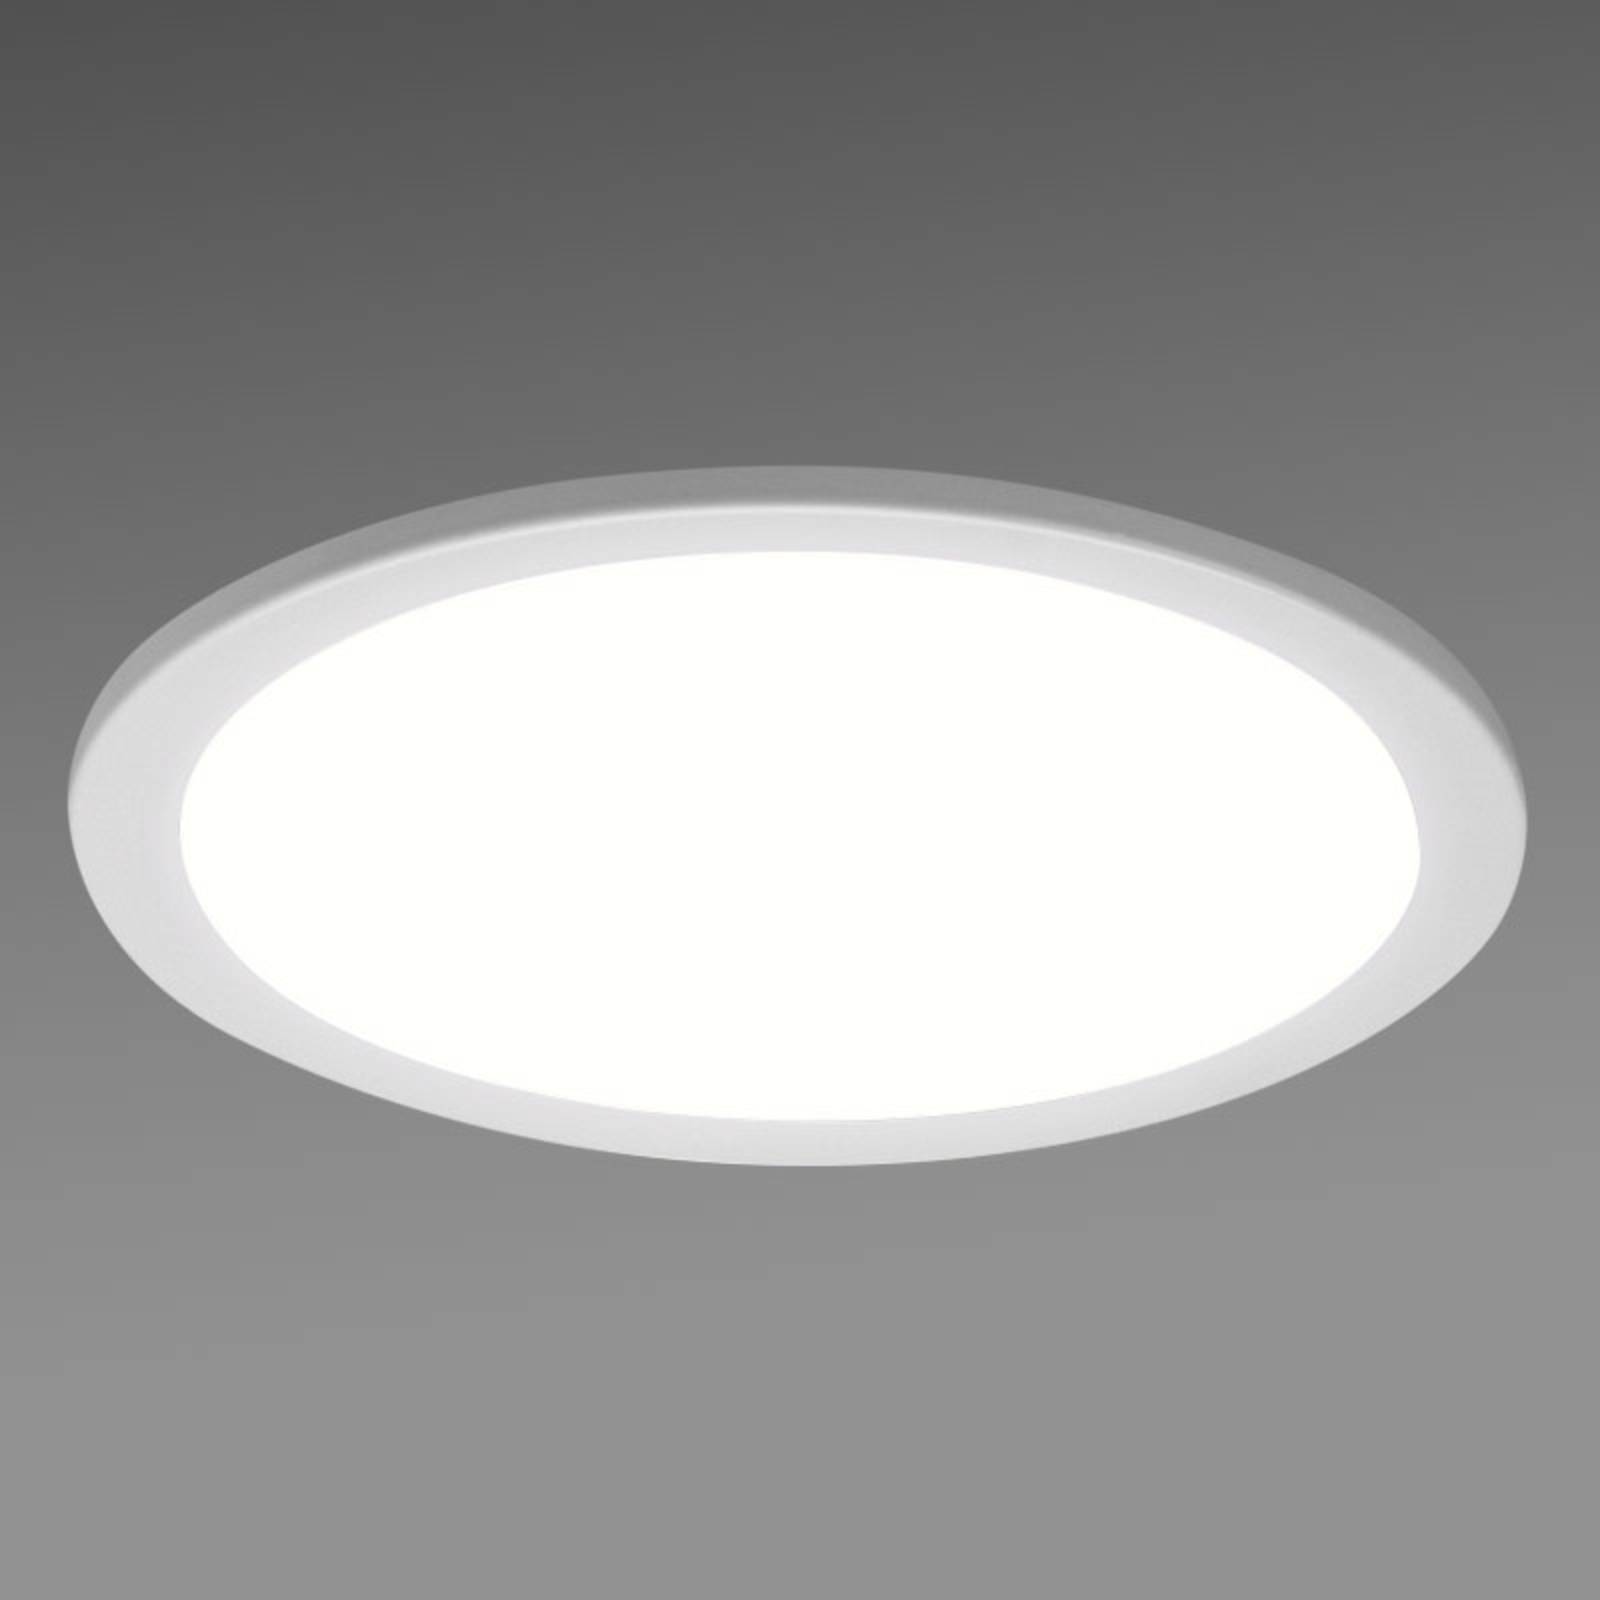 Downlight encastrable LED SBLG rond, 4 000 K